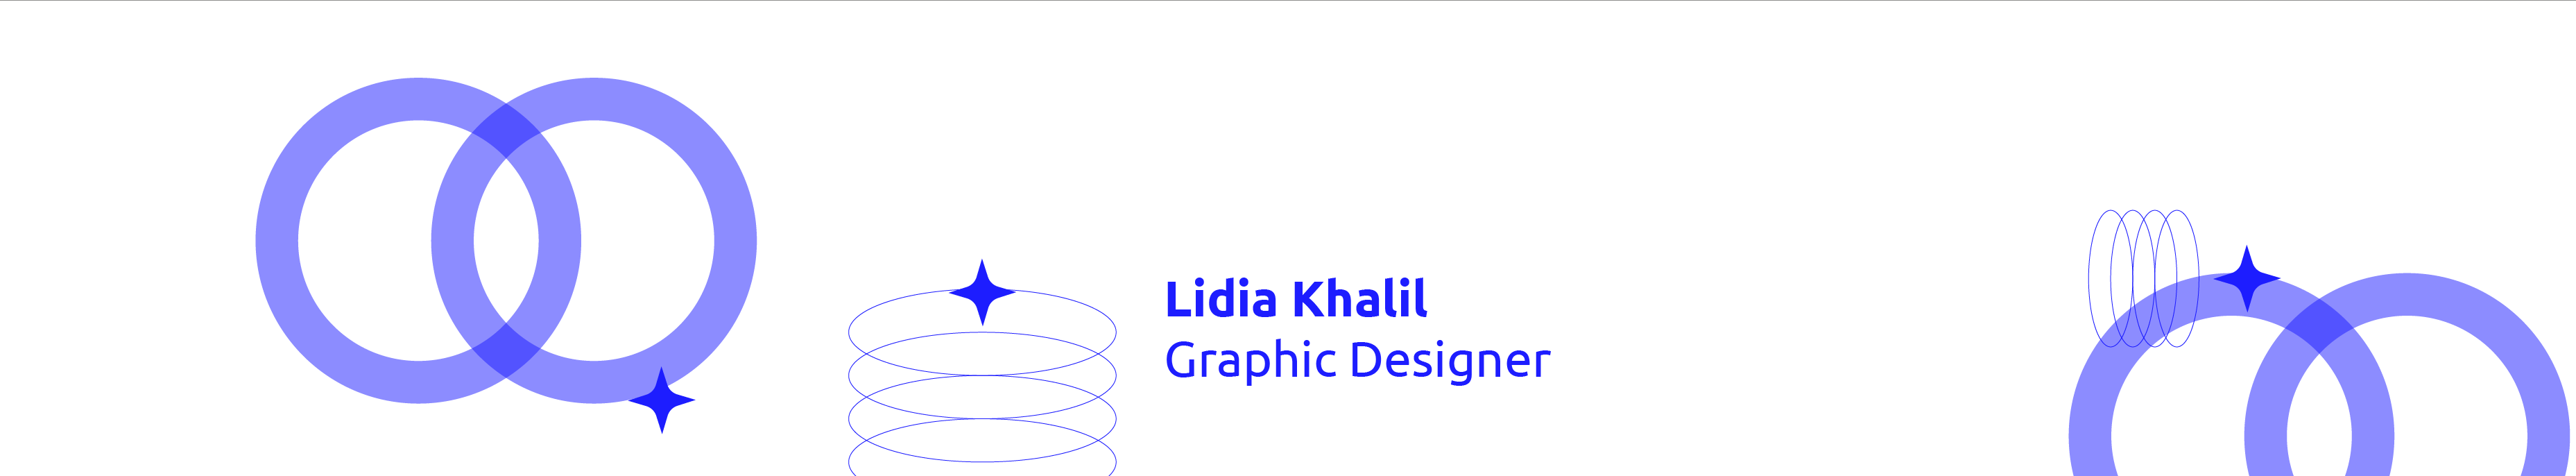 Lidia Khalils profilbanner